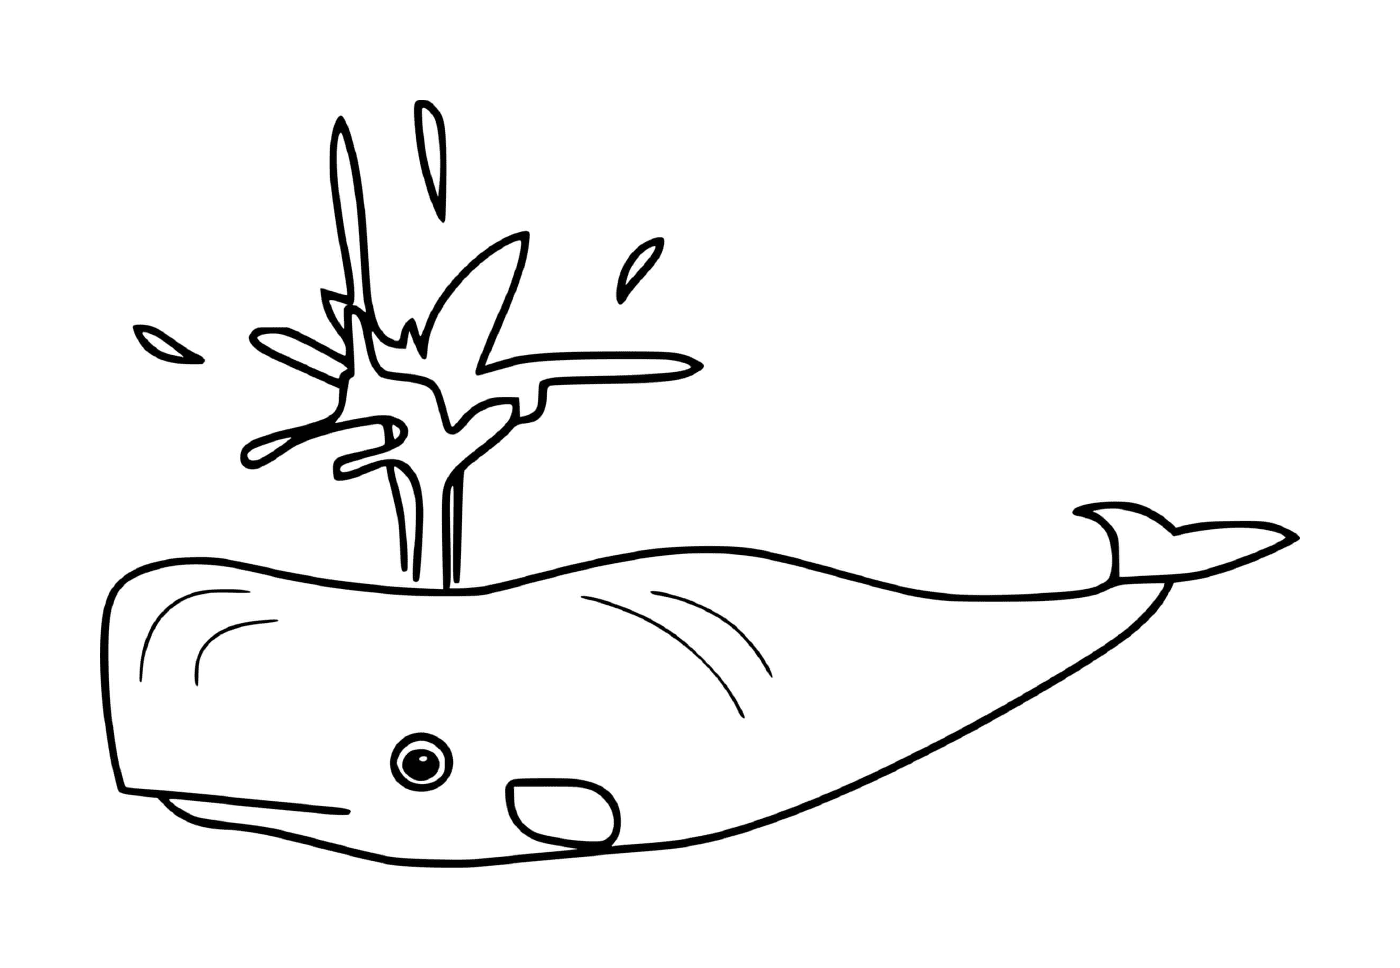  кит с брызгом изо рта 